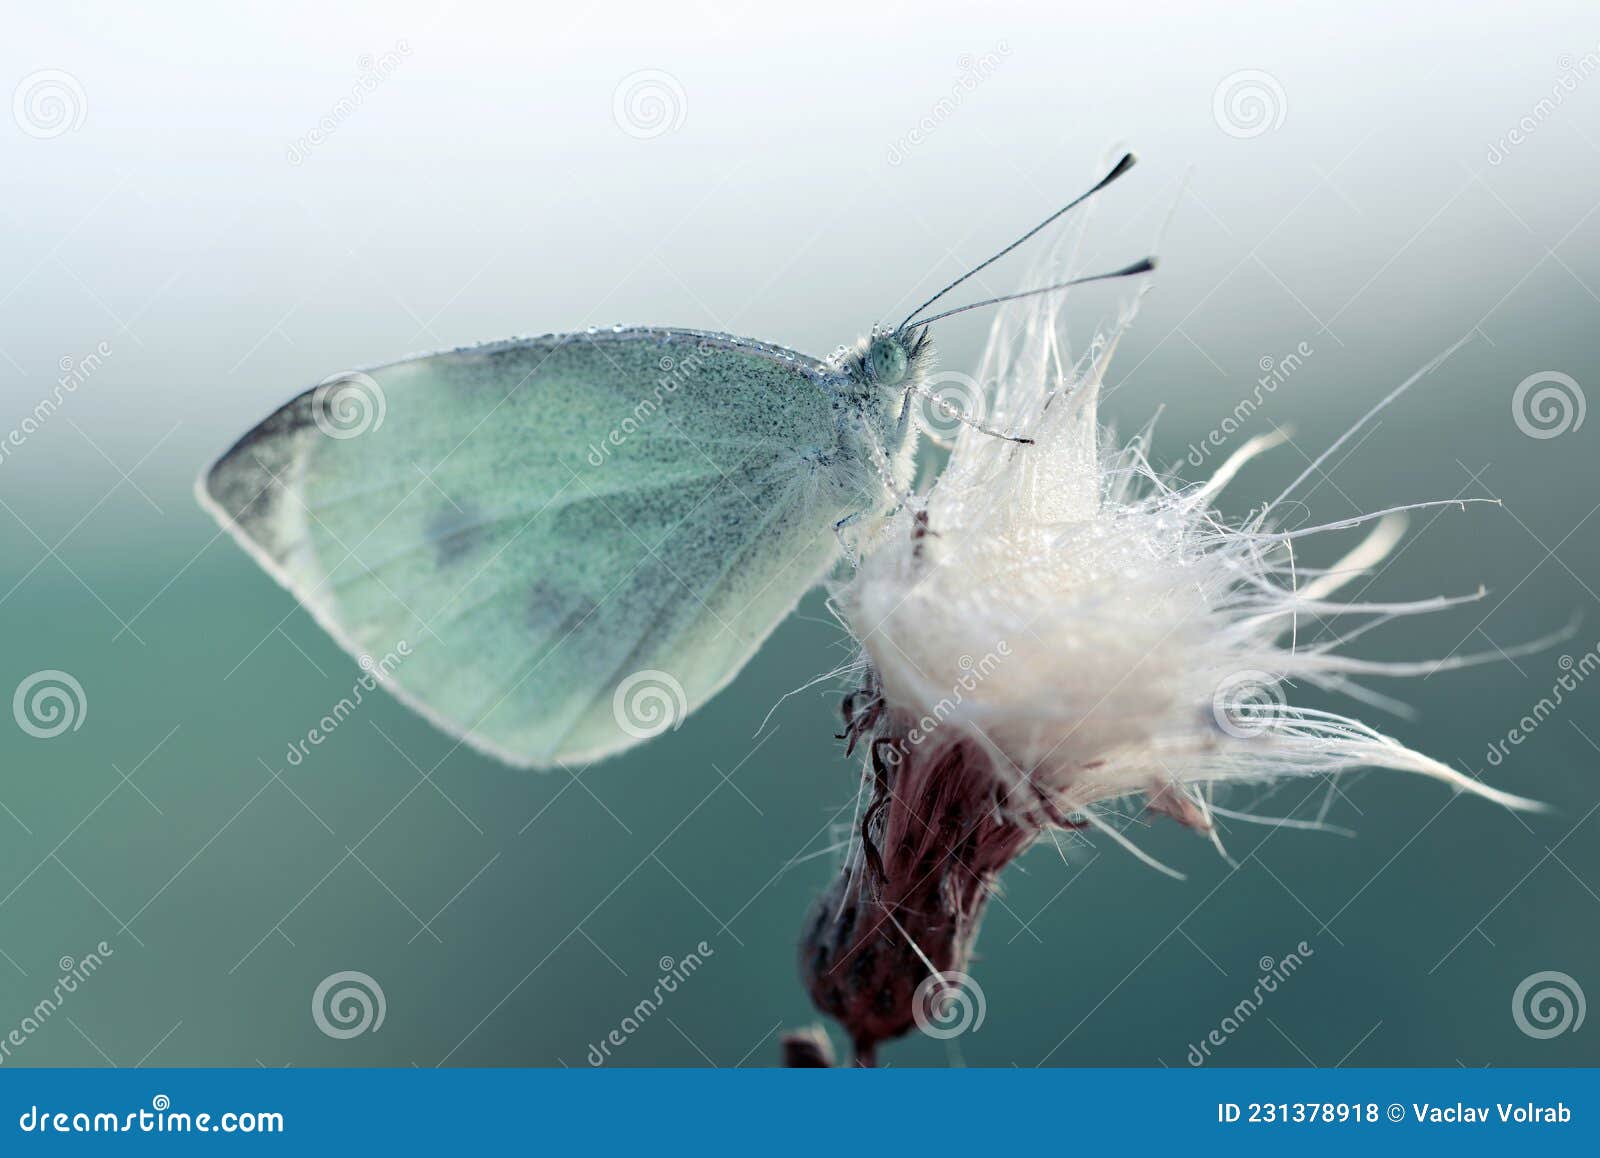 small white butterfly genus pieridae sitting on flower.